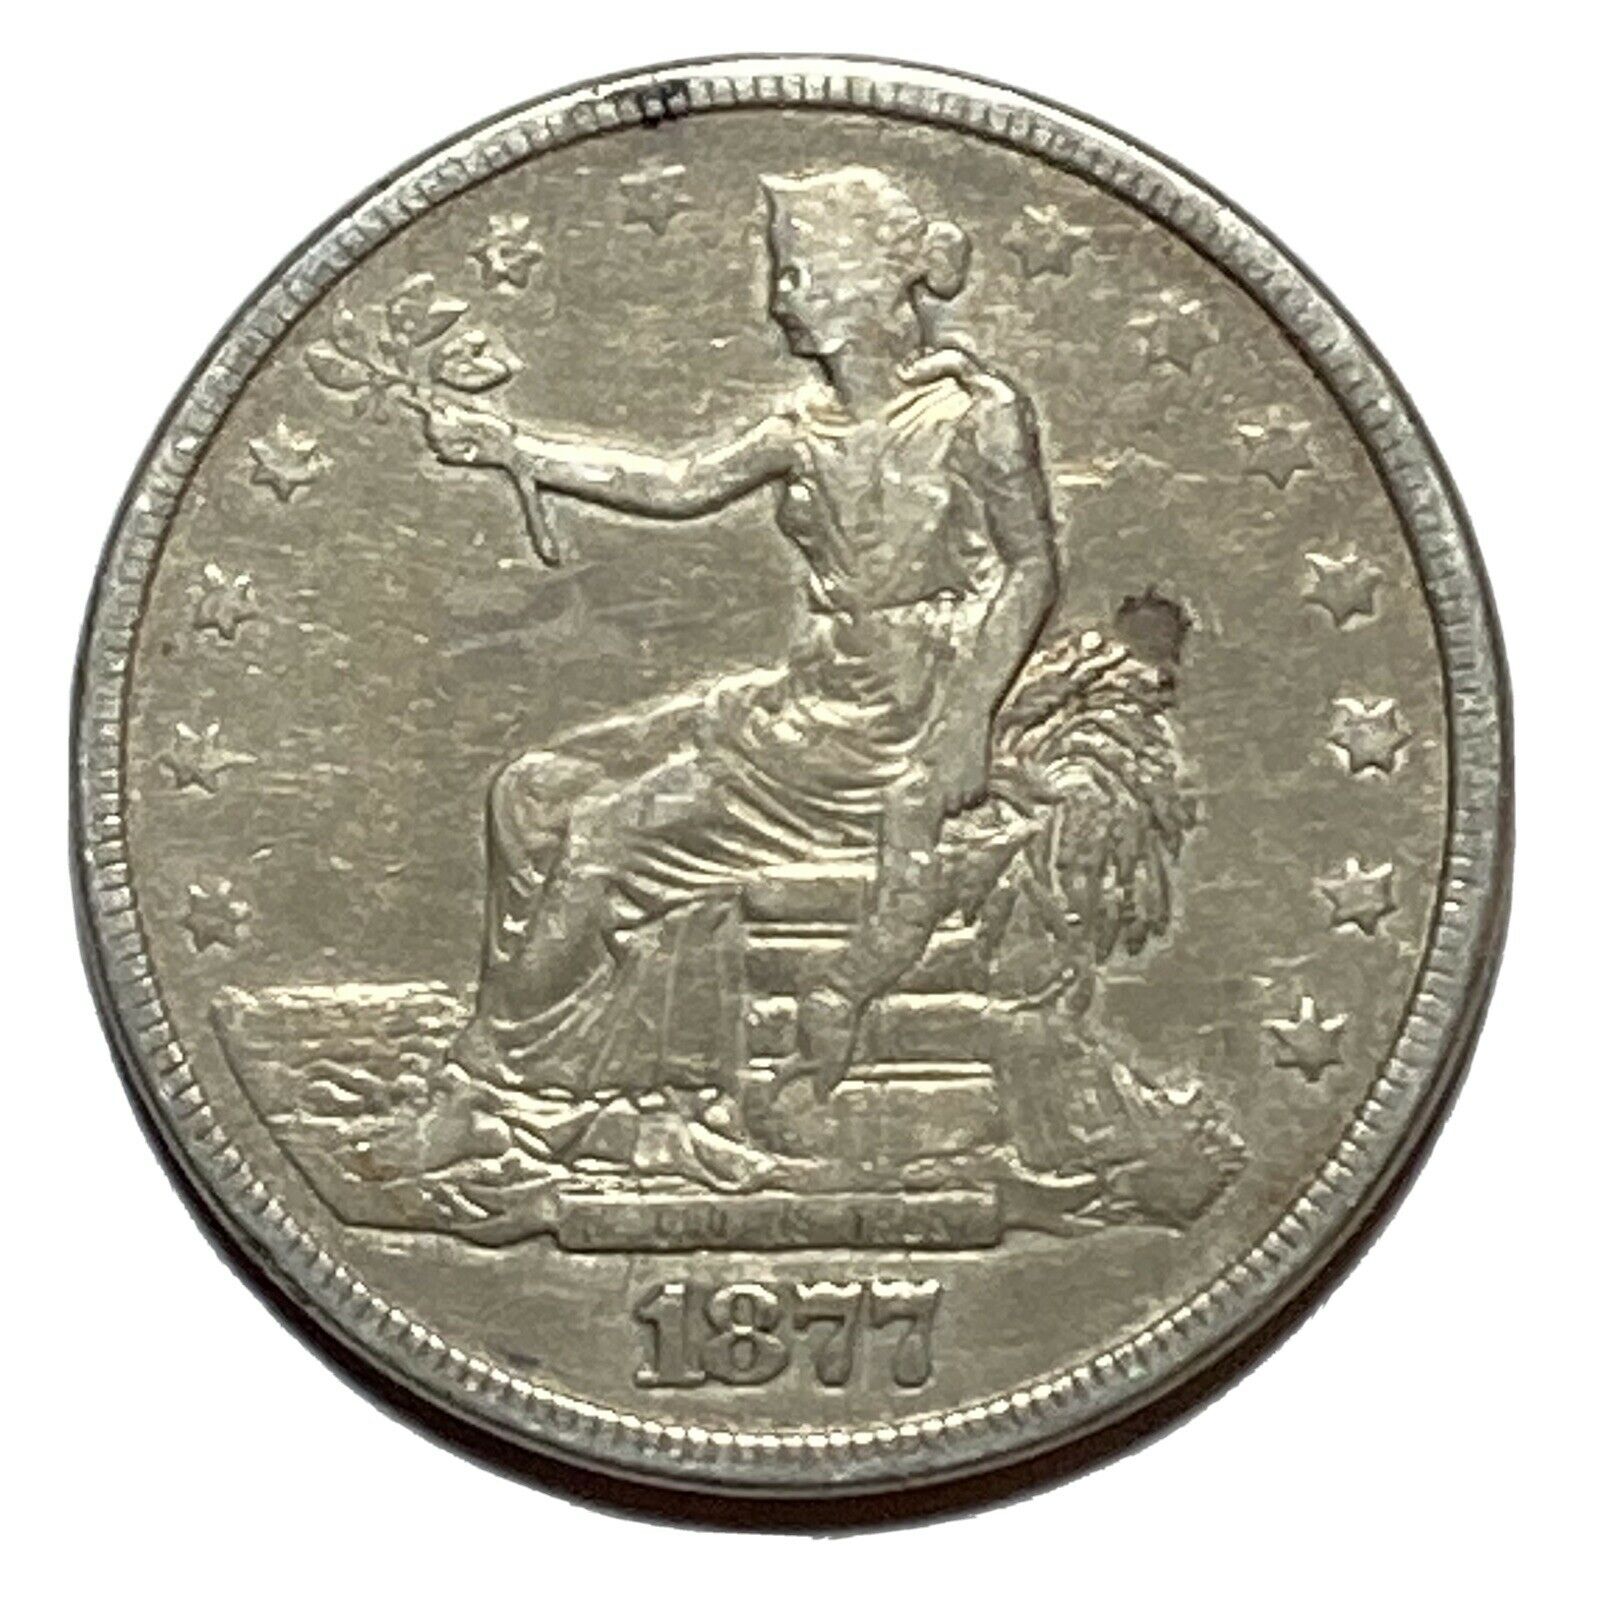 1877 P Silver Trade Dollar- Philadelphia  Mint - Nice Example - Ships Free